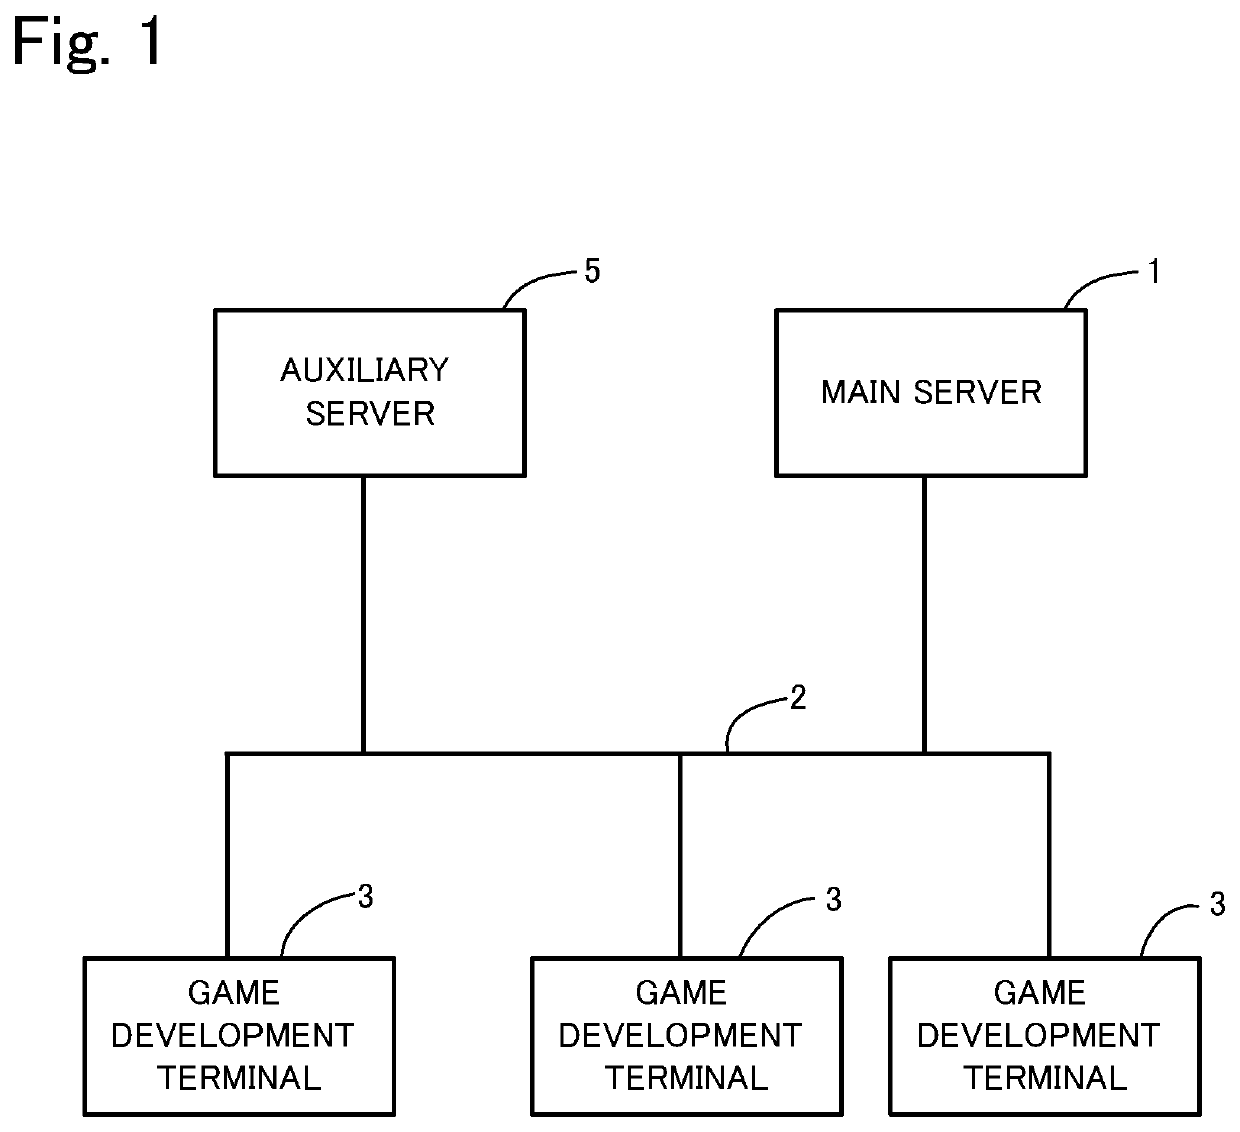 Content development device